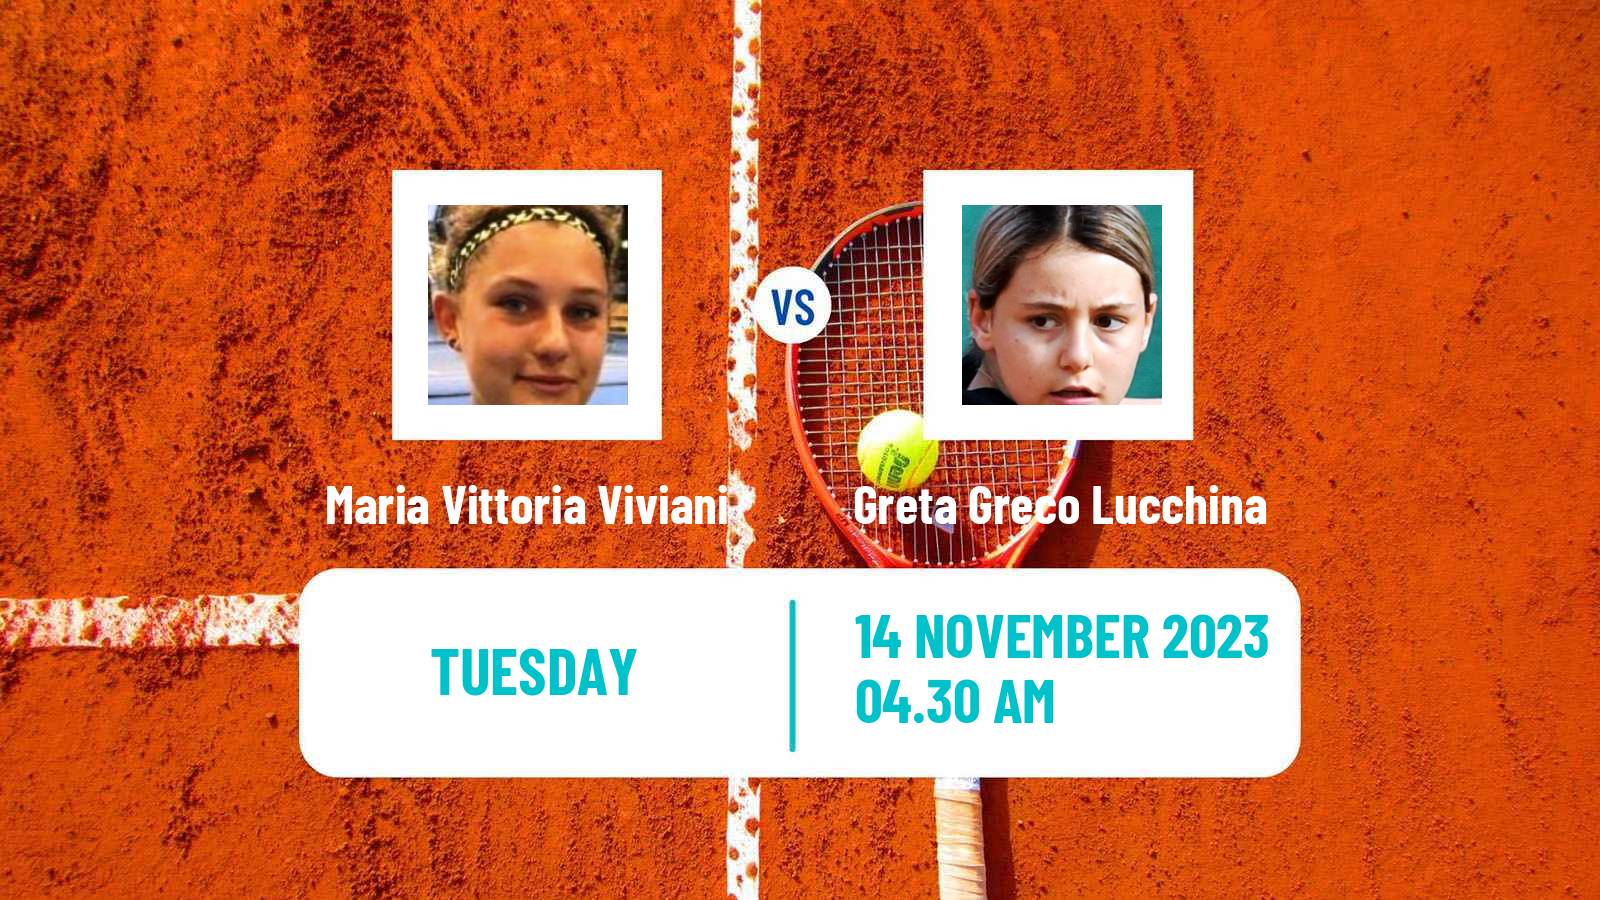 Tennis ITF W25 Solarino 3 Women Maria Vittoria Viviani - Greta Greco Lucchina